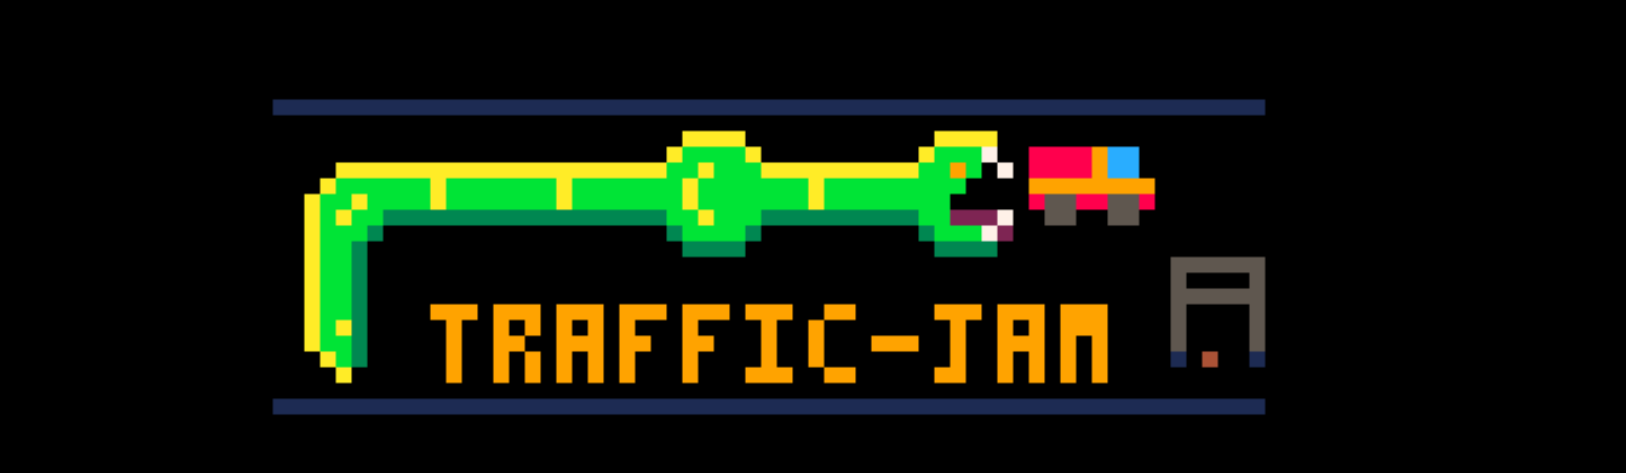 Traffic-Jam